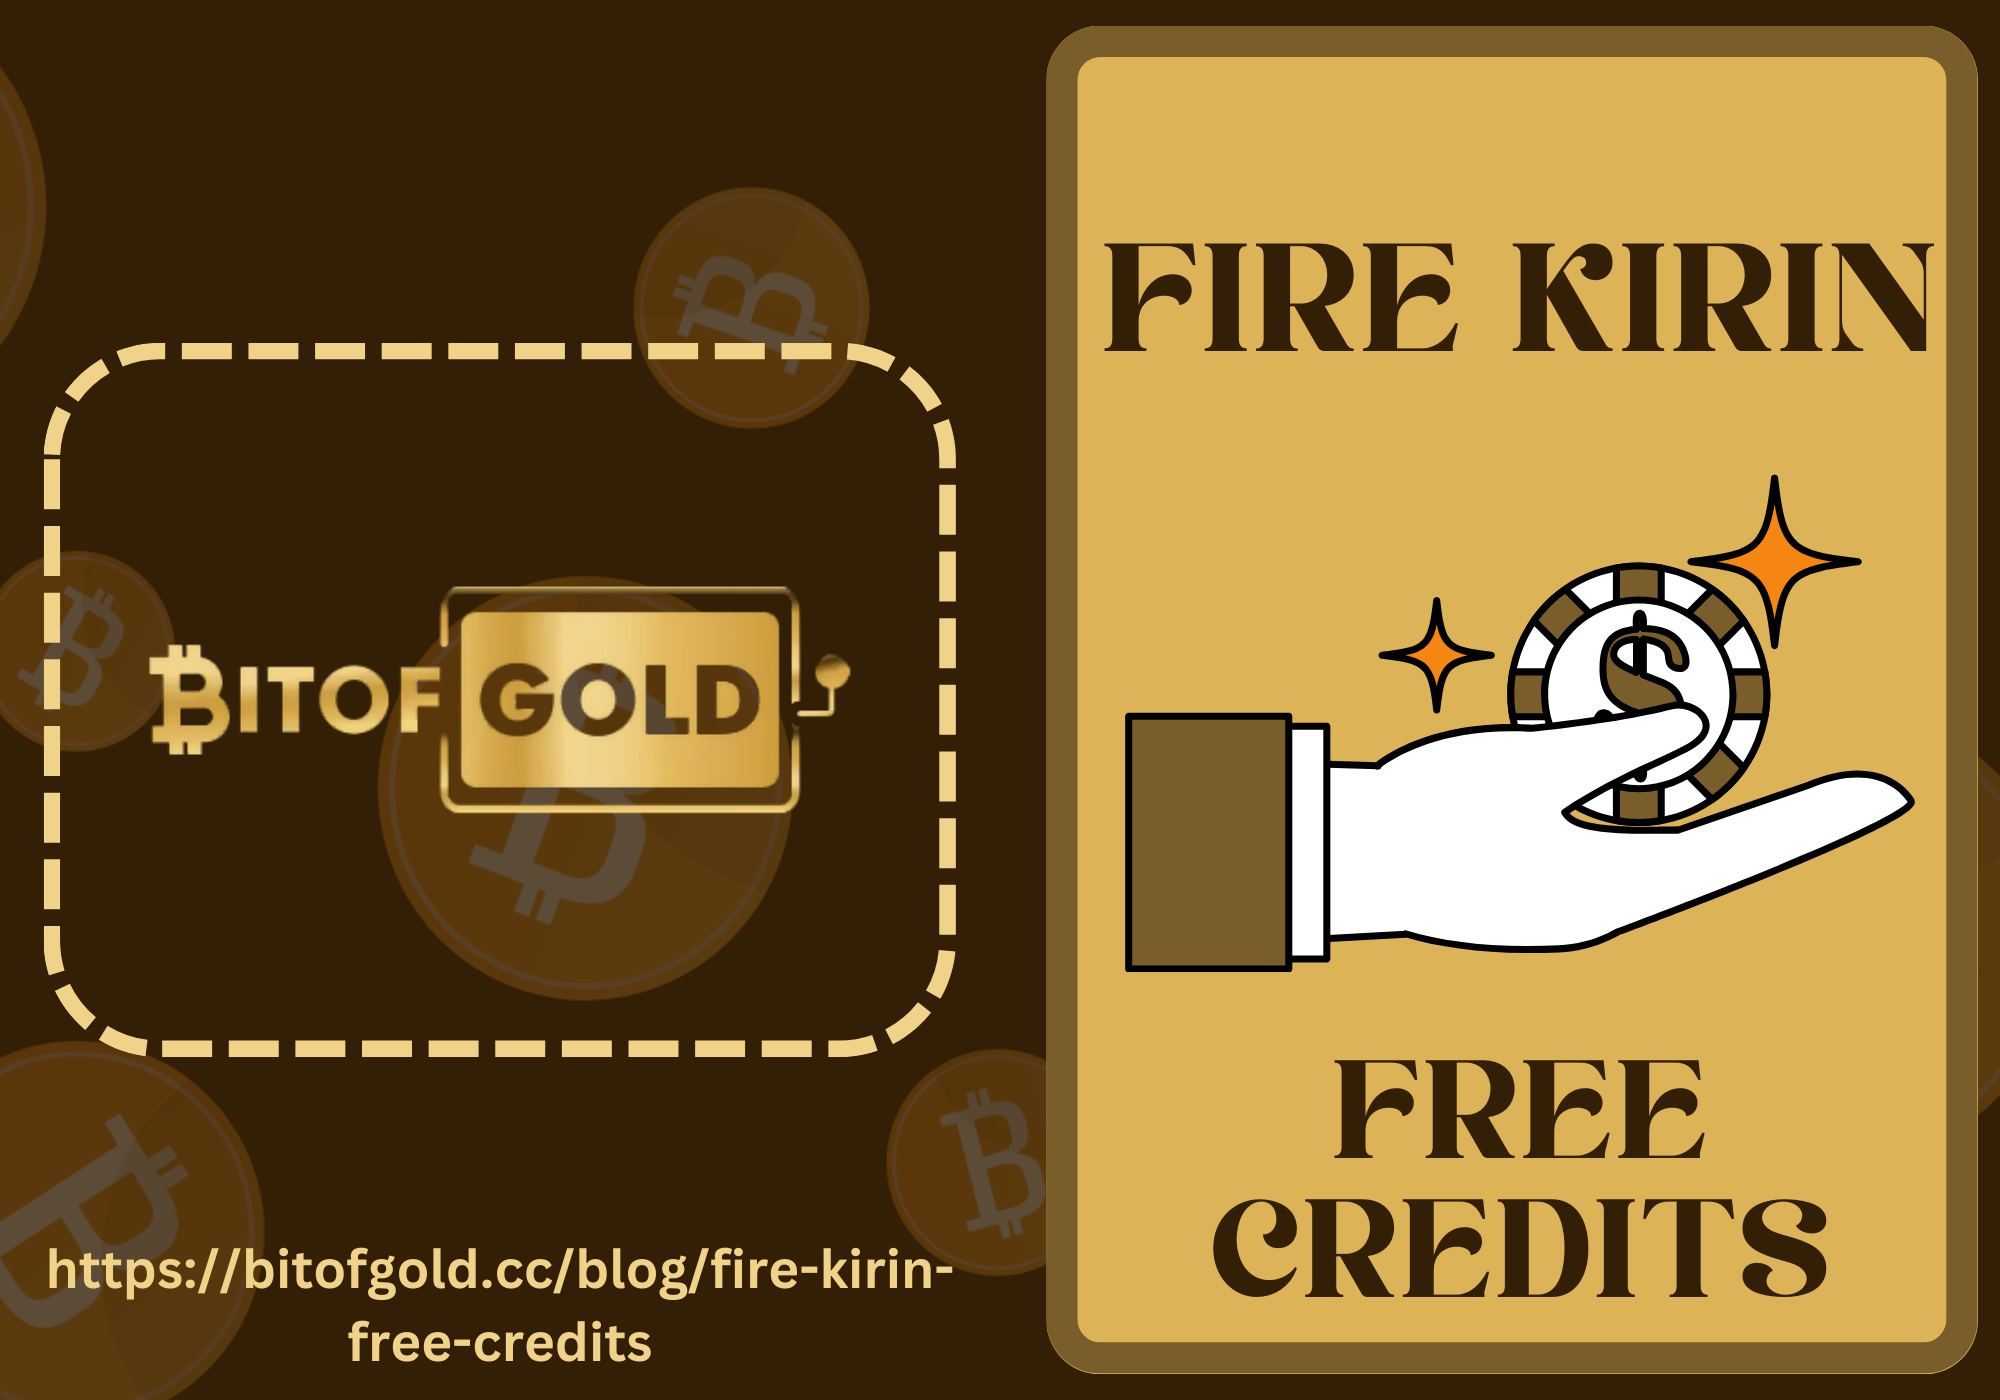 fire kirin free credits